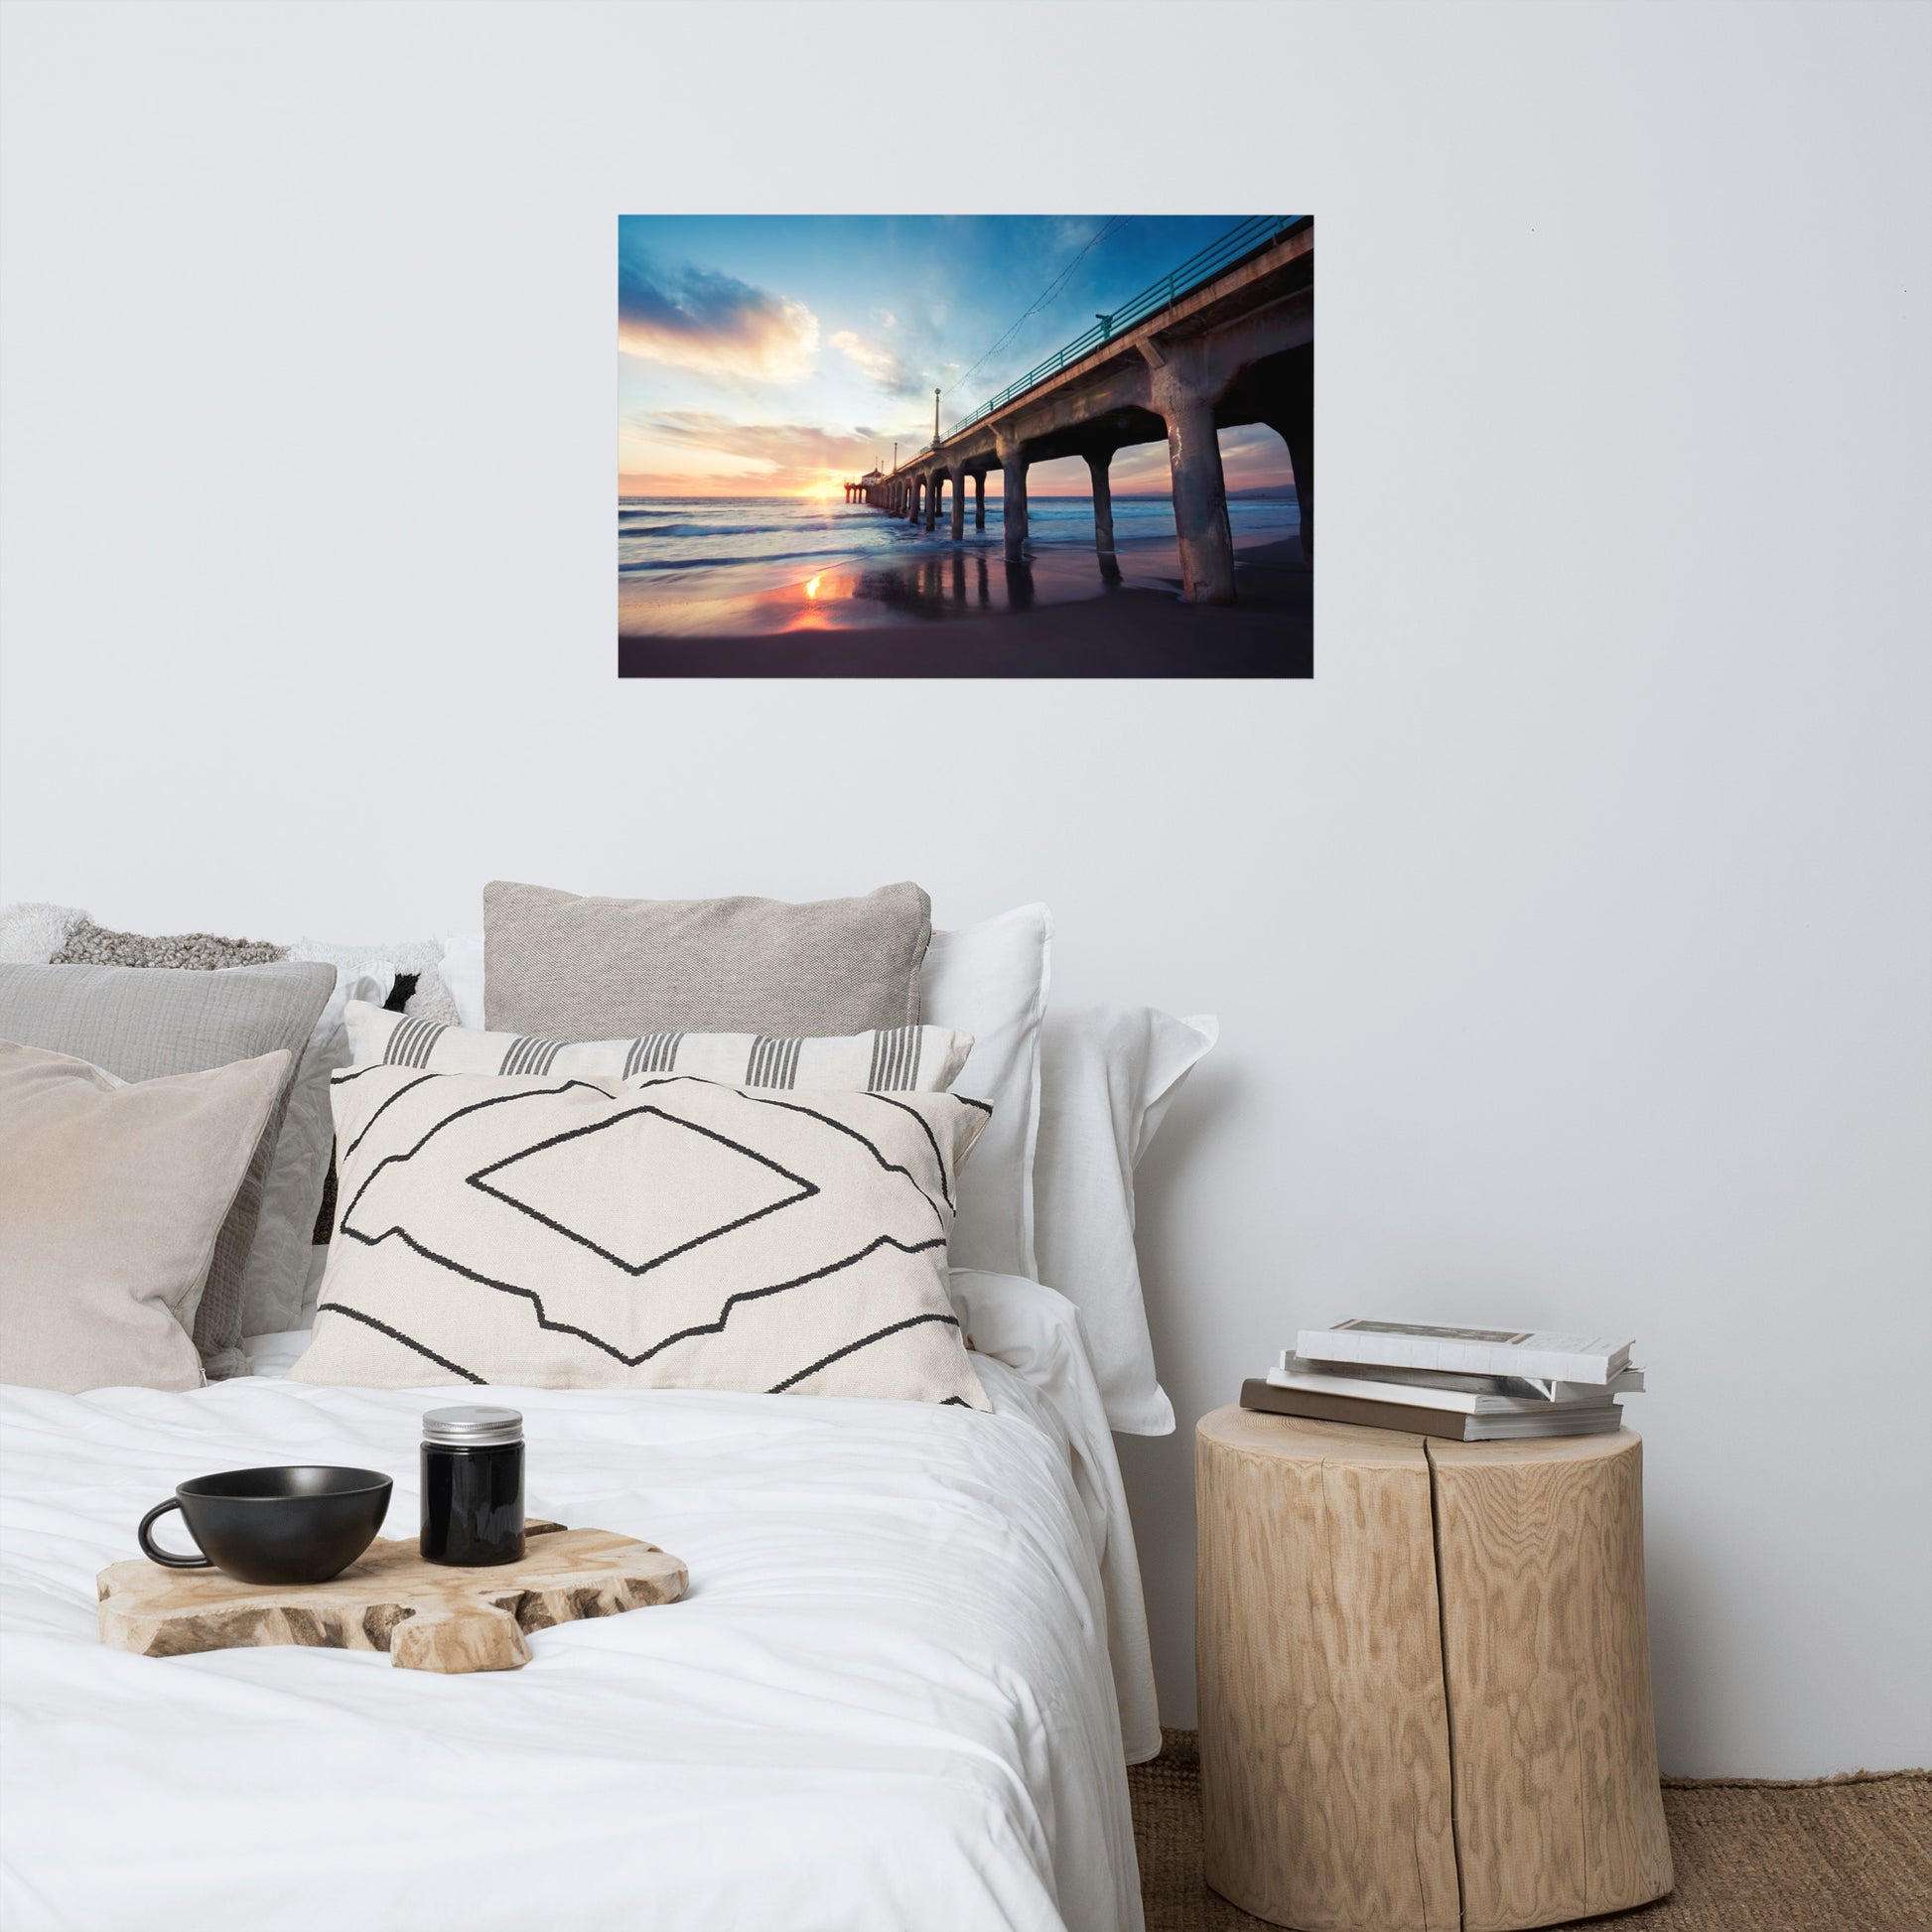 Tranquil Manhattan Beach Pier at Sunset Coastal Landscape Photo Loose Wall Art Prints